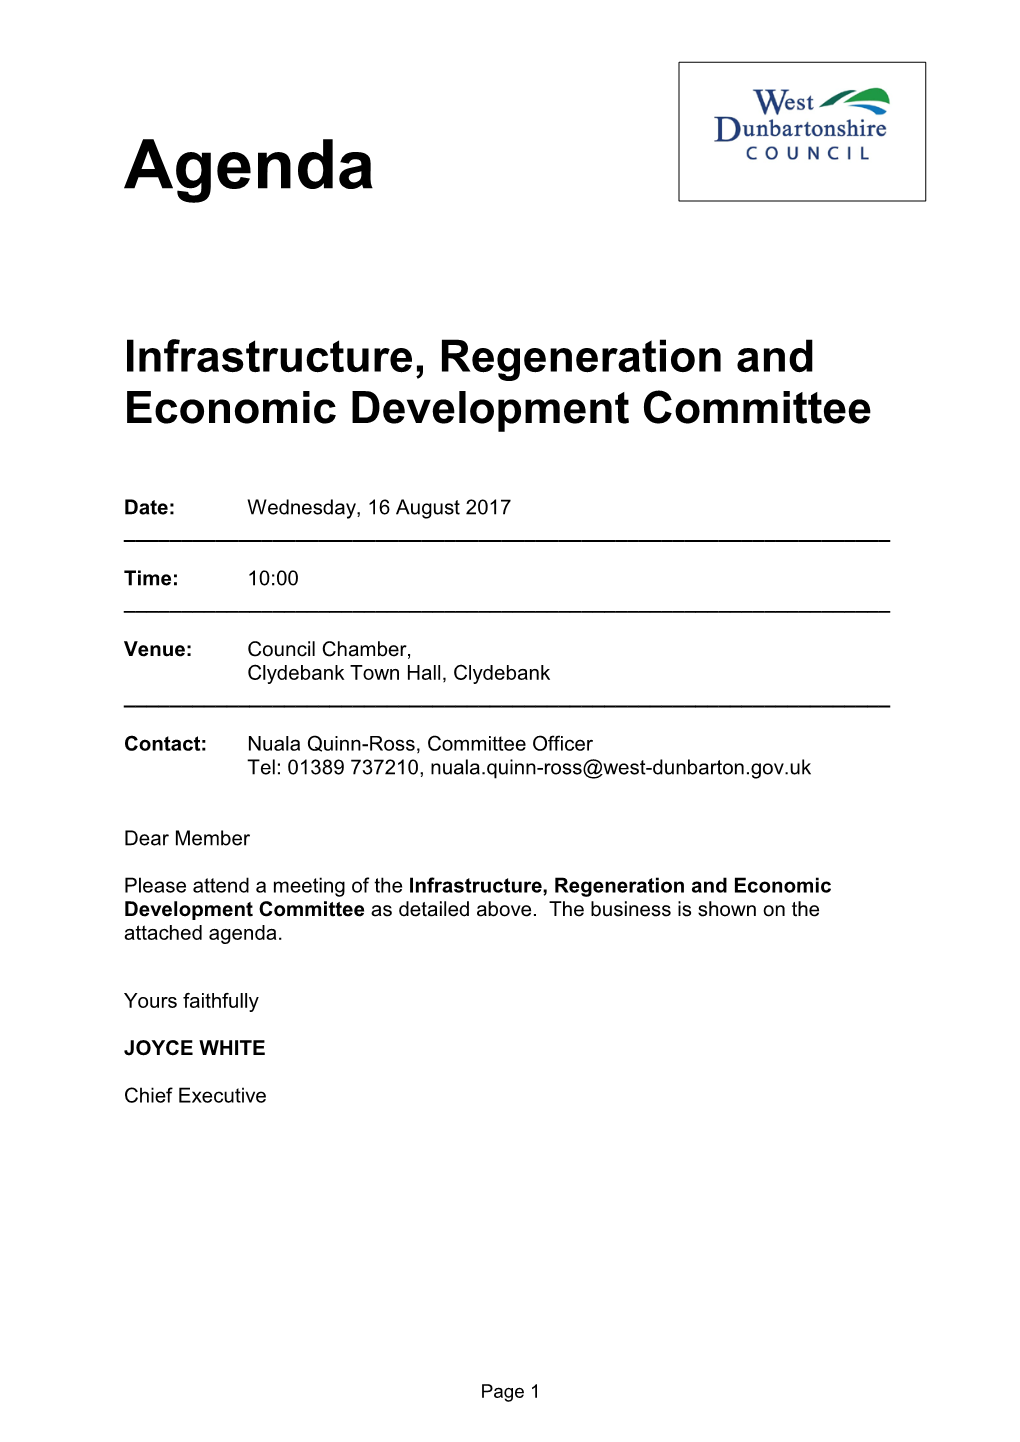 Infrastructure, Regeneration and Economic Development Committee